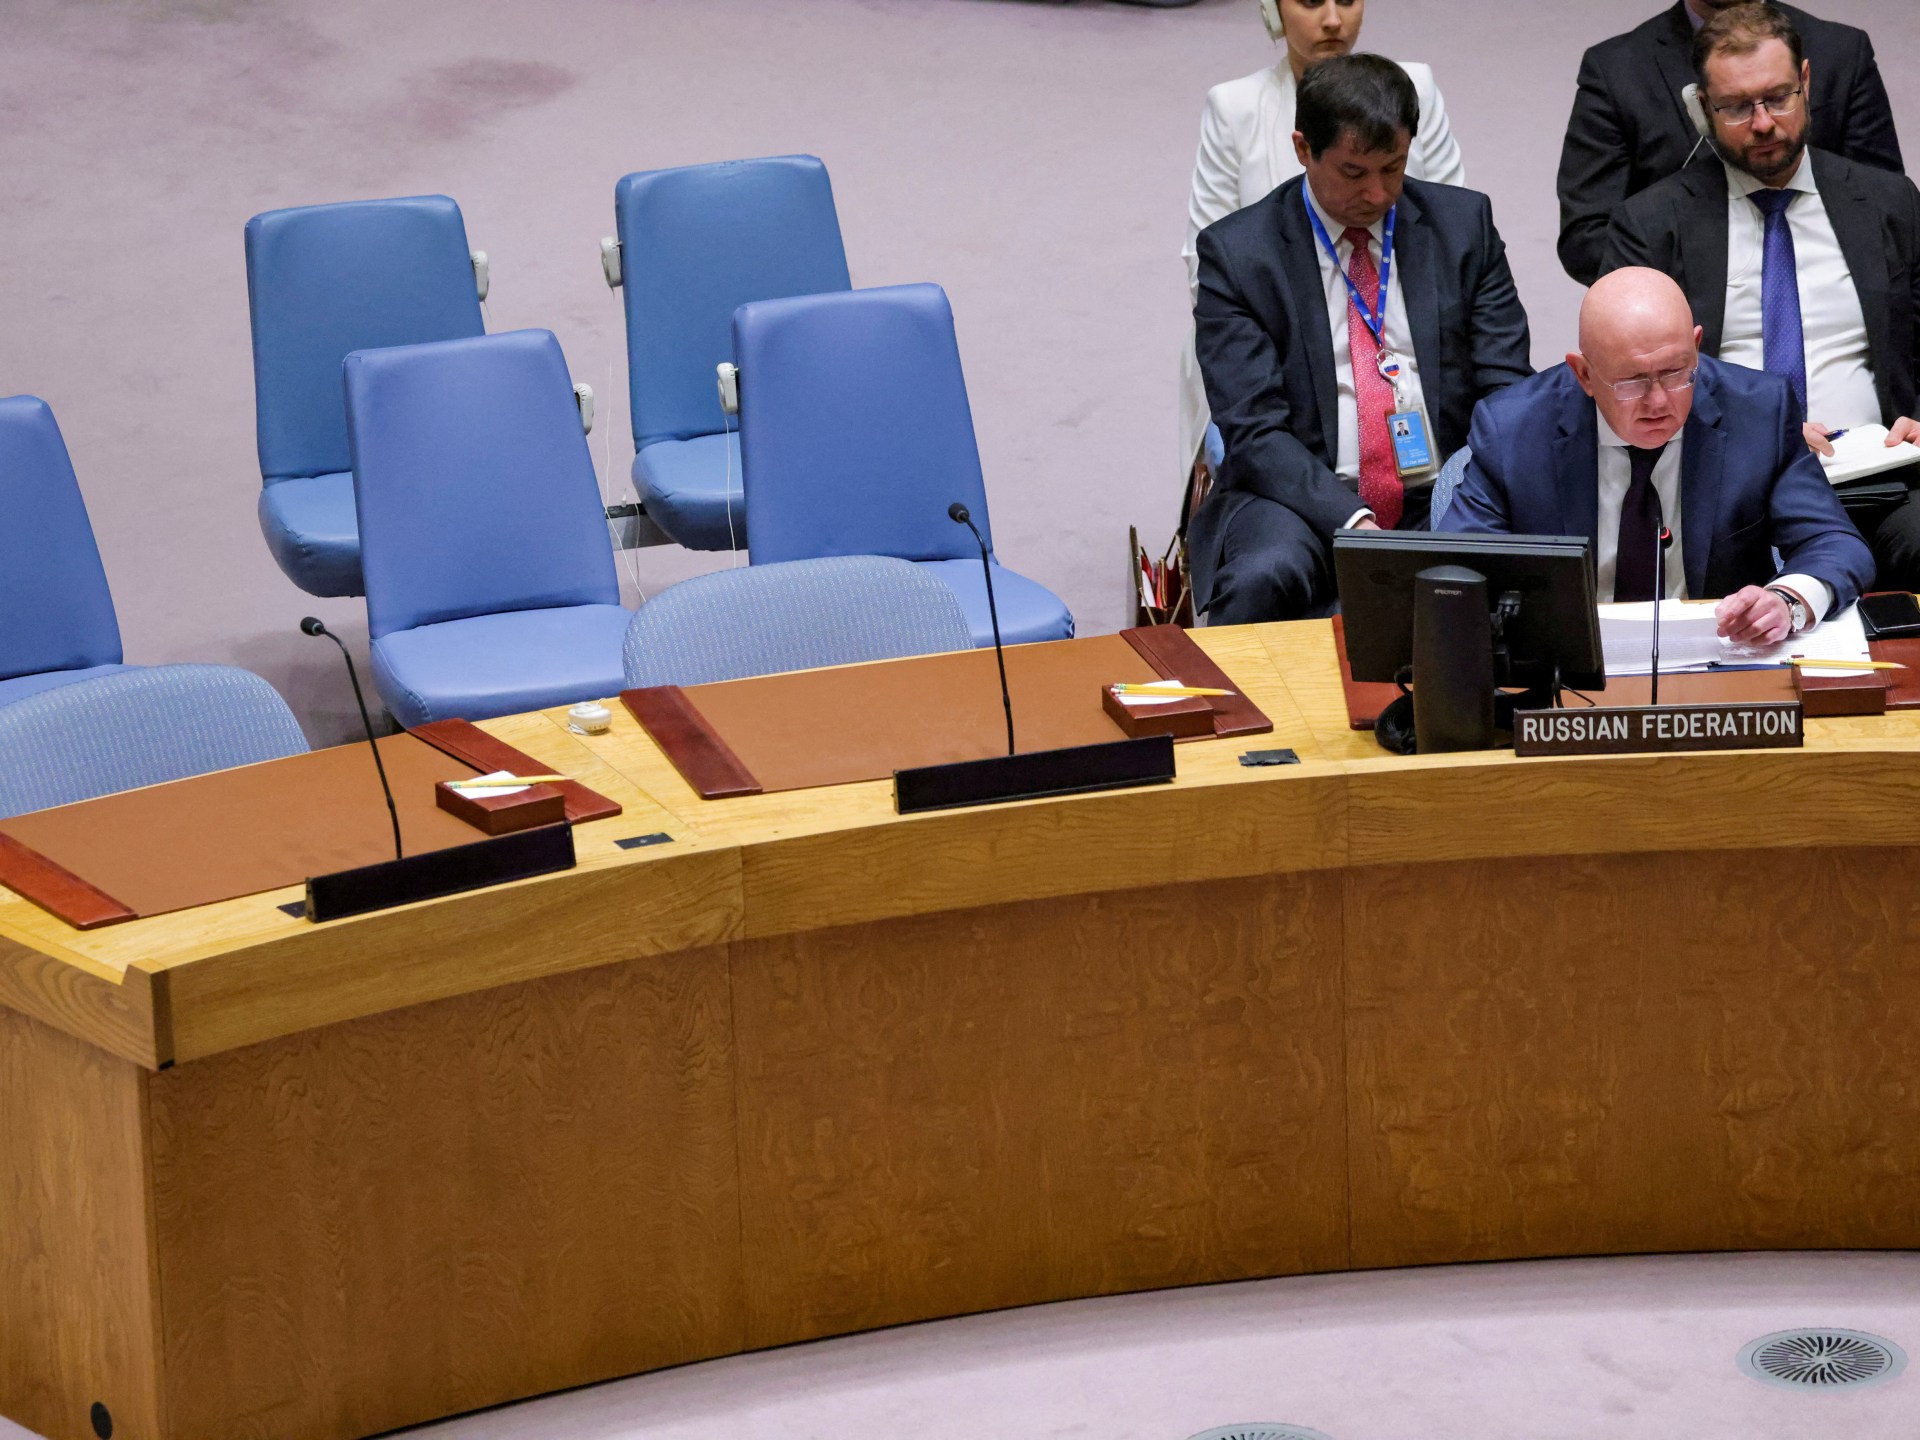 Russia vetoes UN resolution on Ukraine annexation, China abstains - Al Jazeera English